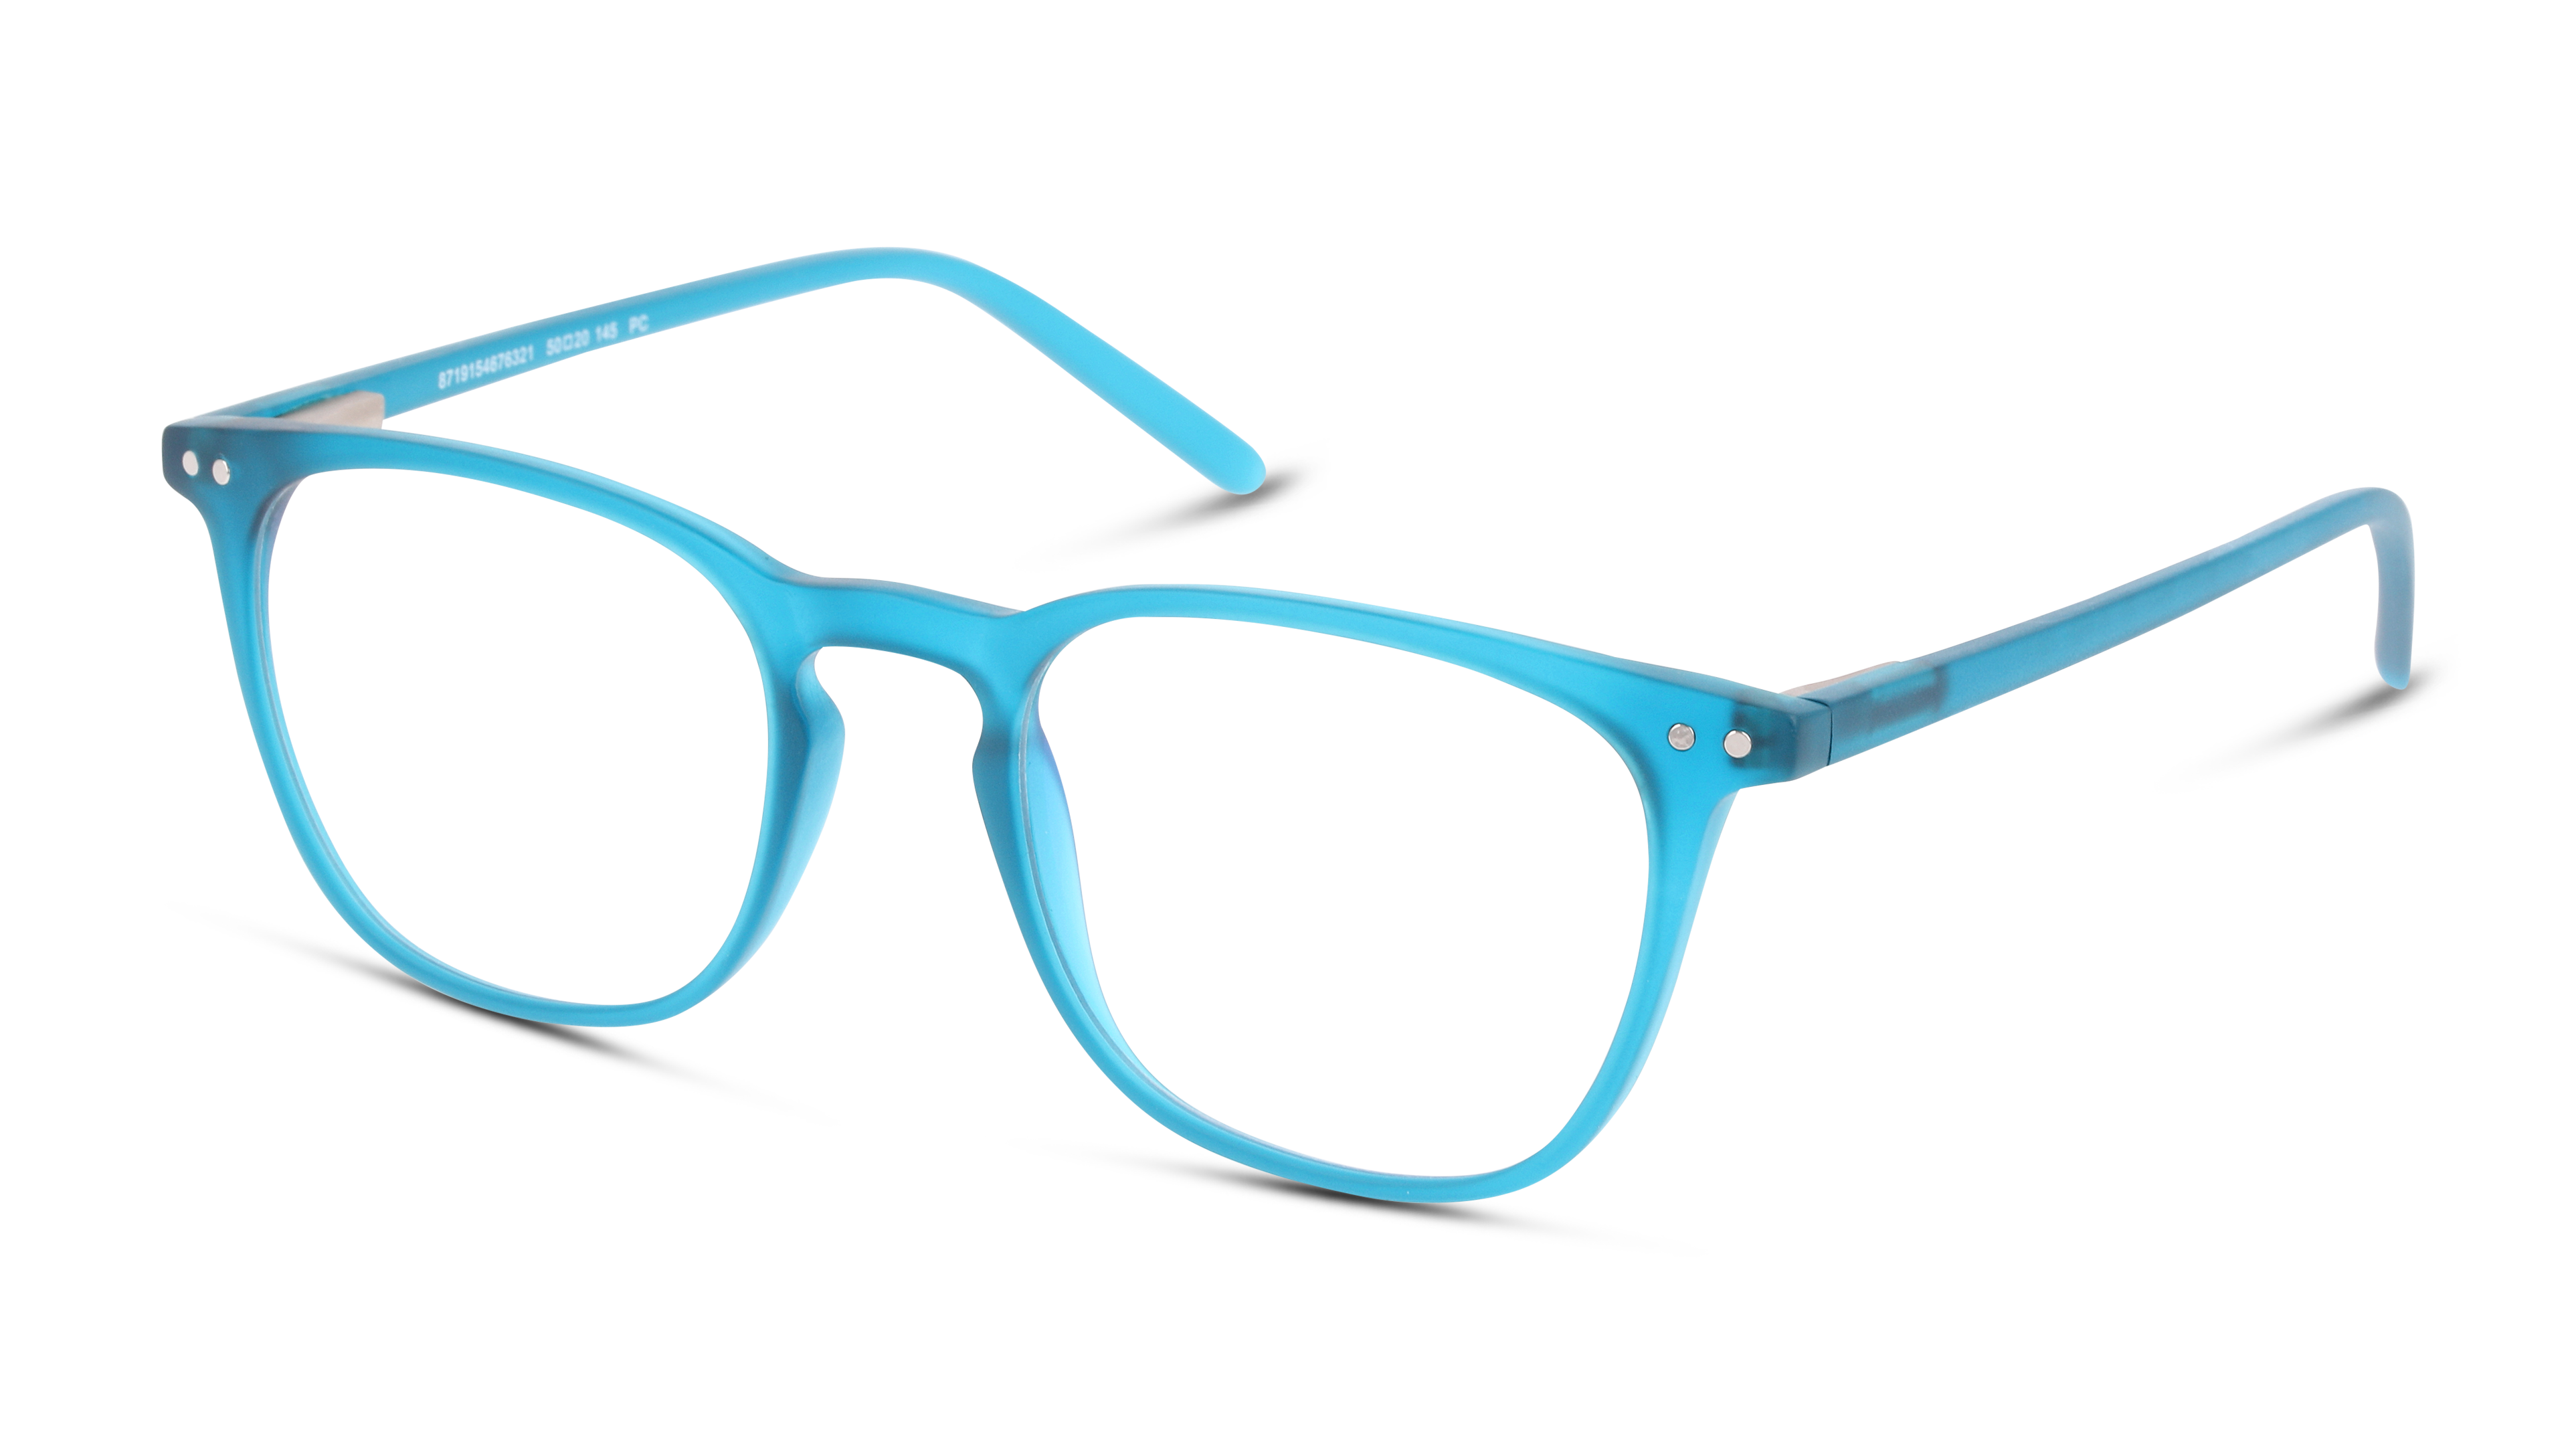 Mesybveo 2 Pack Gafas de Lectura, Gafas Anti Luz Azul, Gafas para